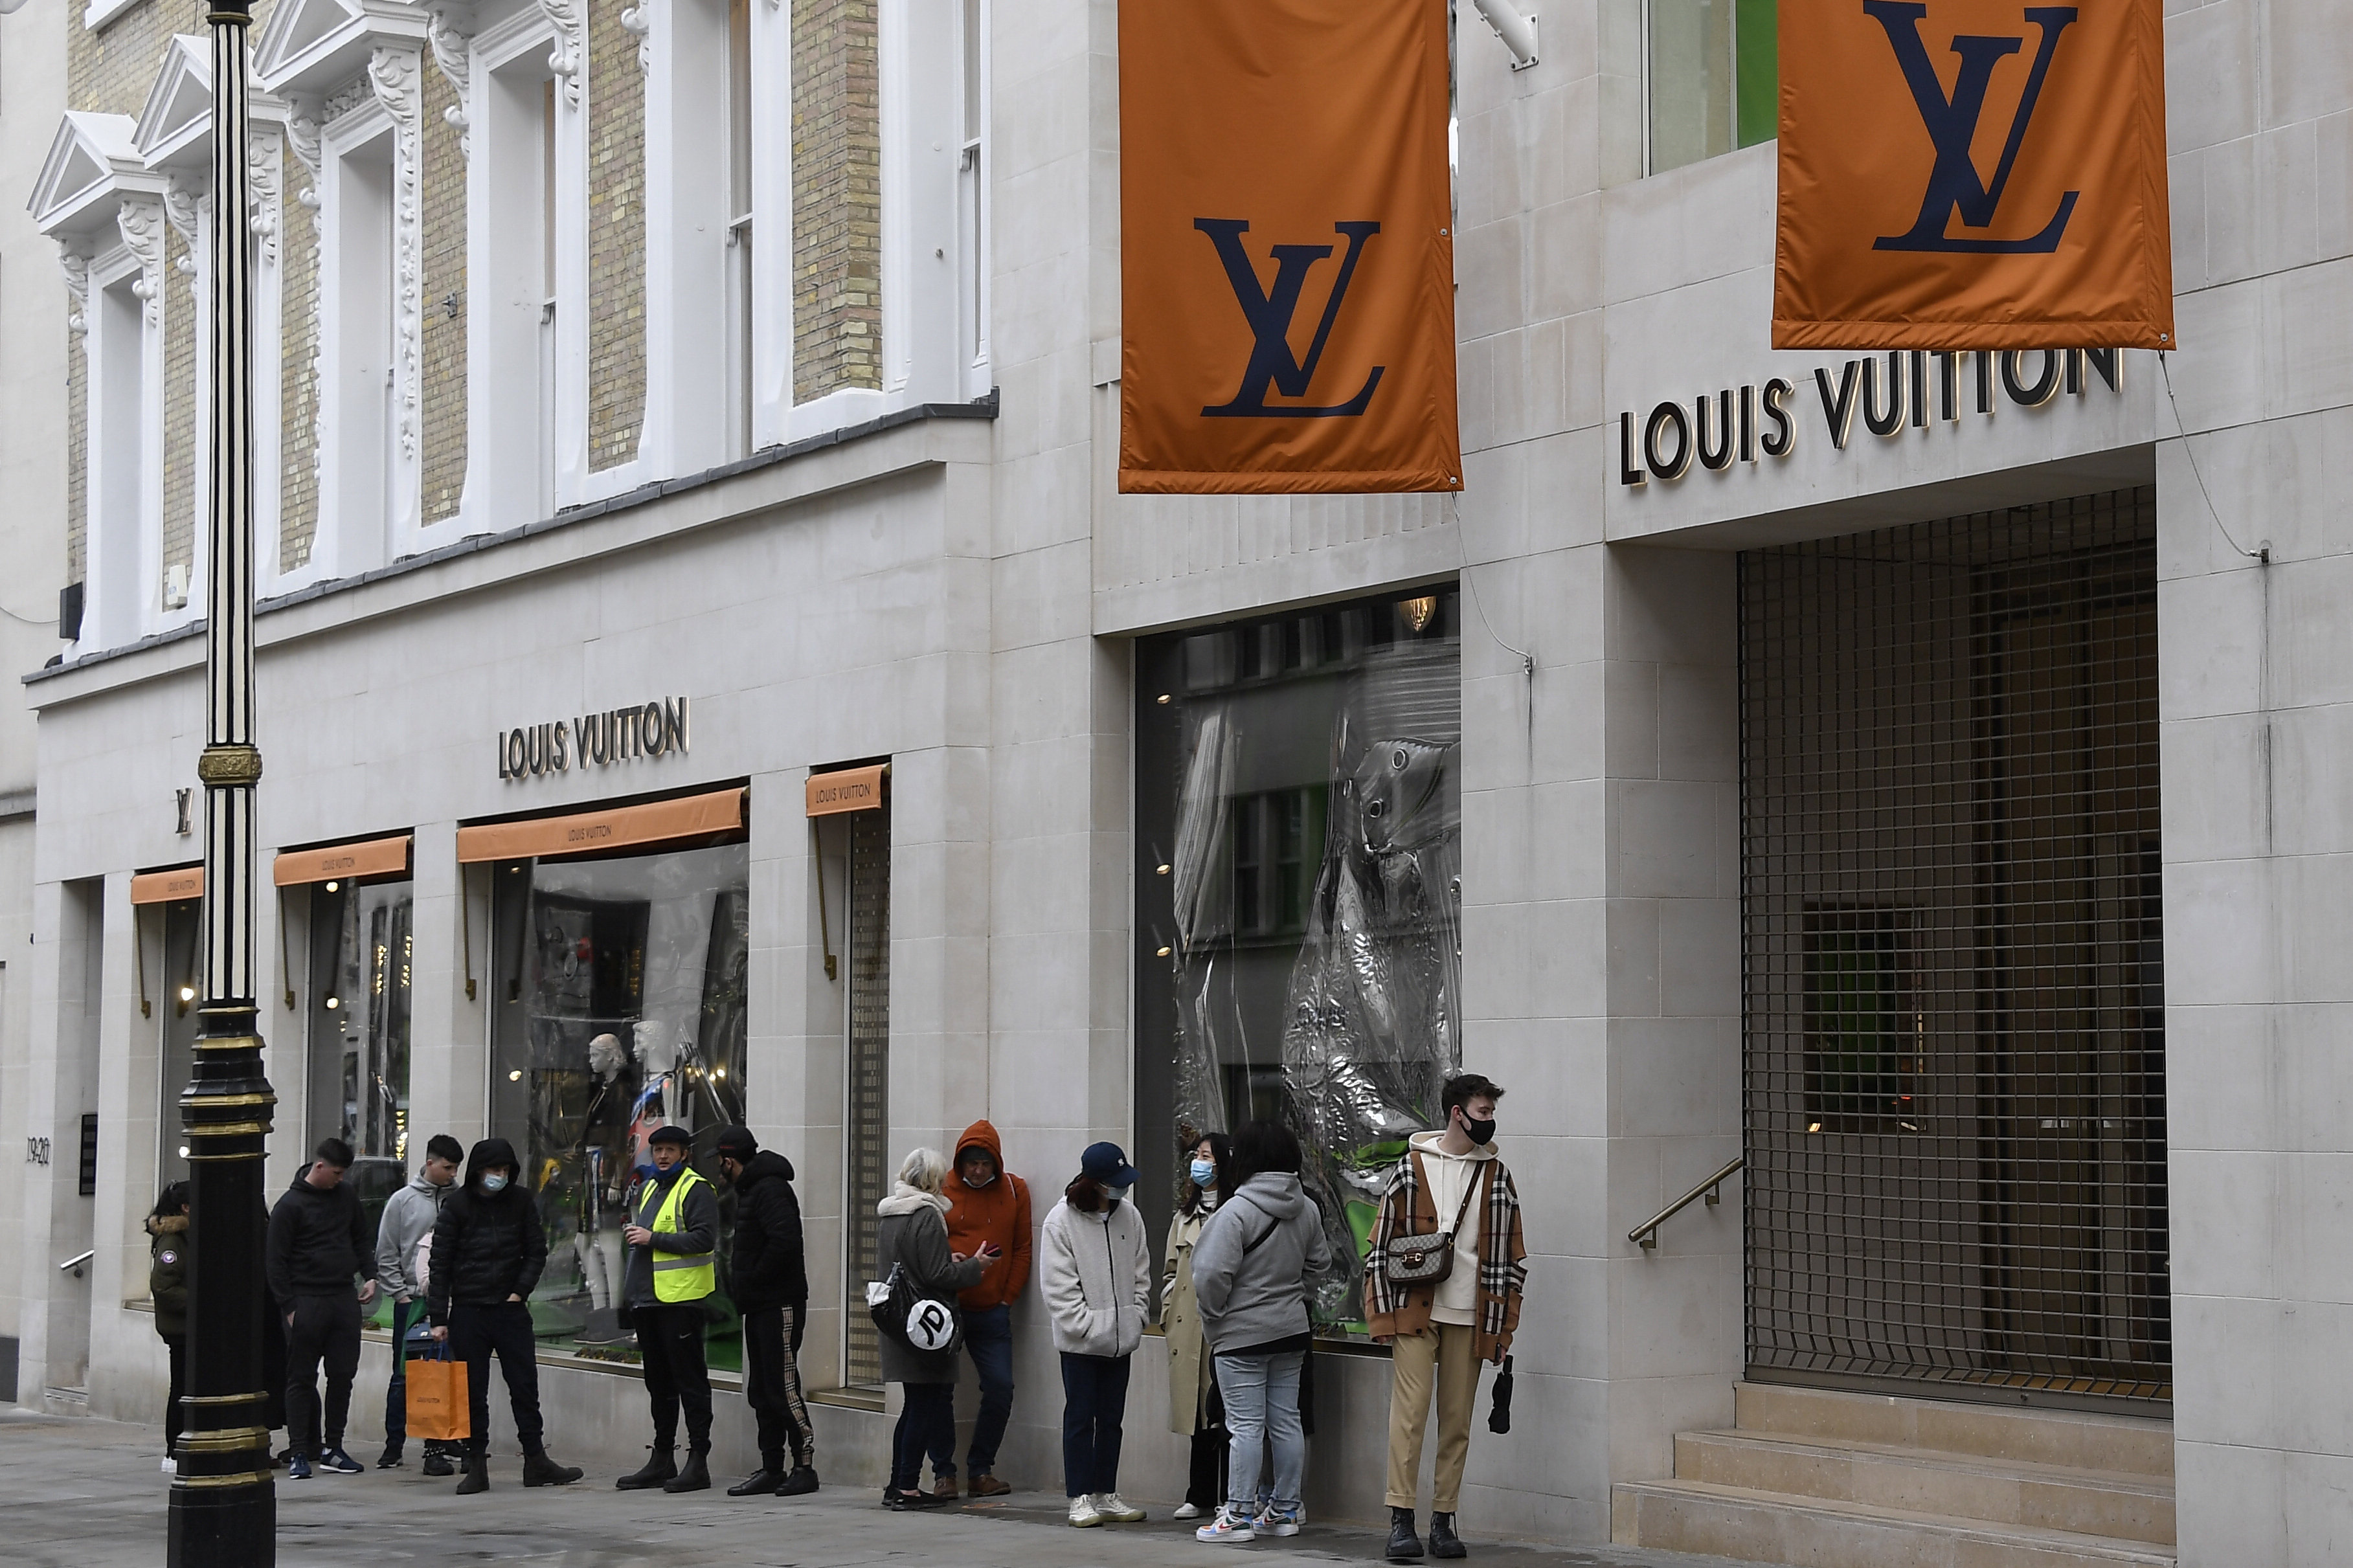 Lvmh Sales Grow As Luxury Goods Industry Rebounds